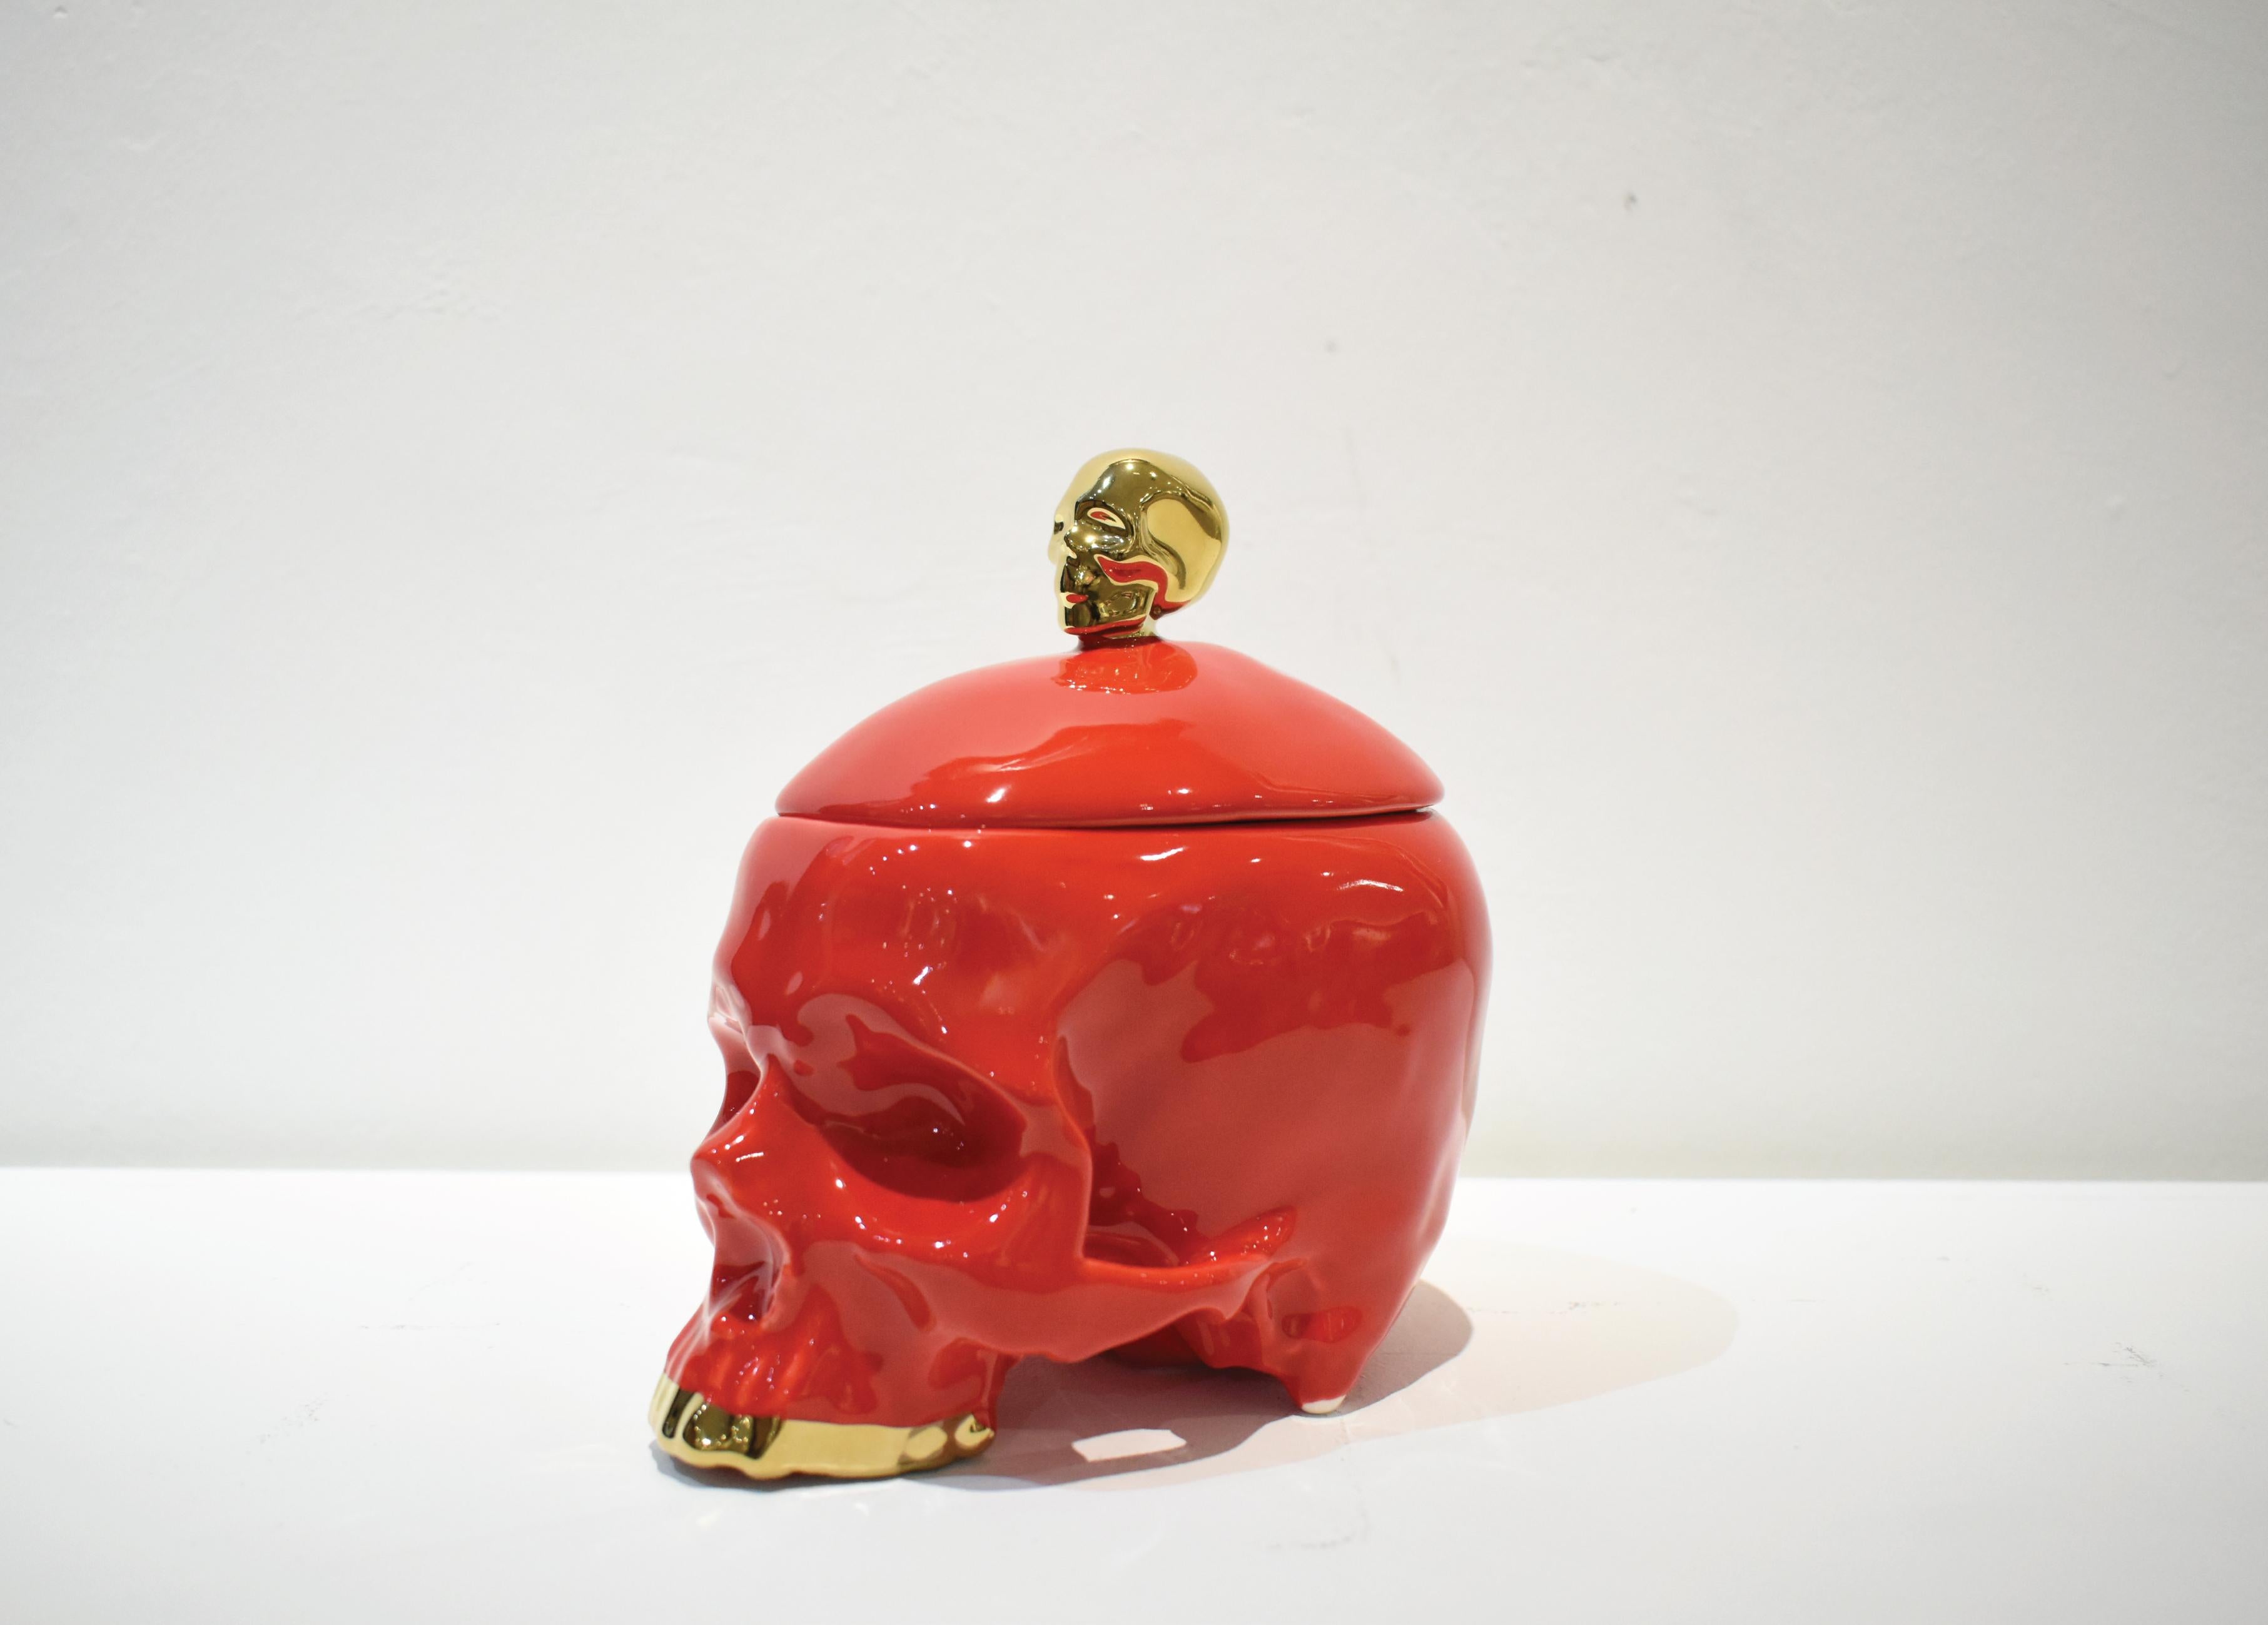 Porzellan-Skulptur in Totenkopfform in Rot und Gold, abnehmbarer Deckel (Pop-Art), Sculpture, von Huang Yulong